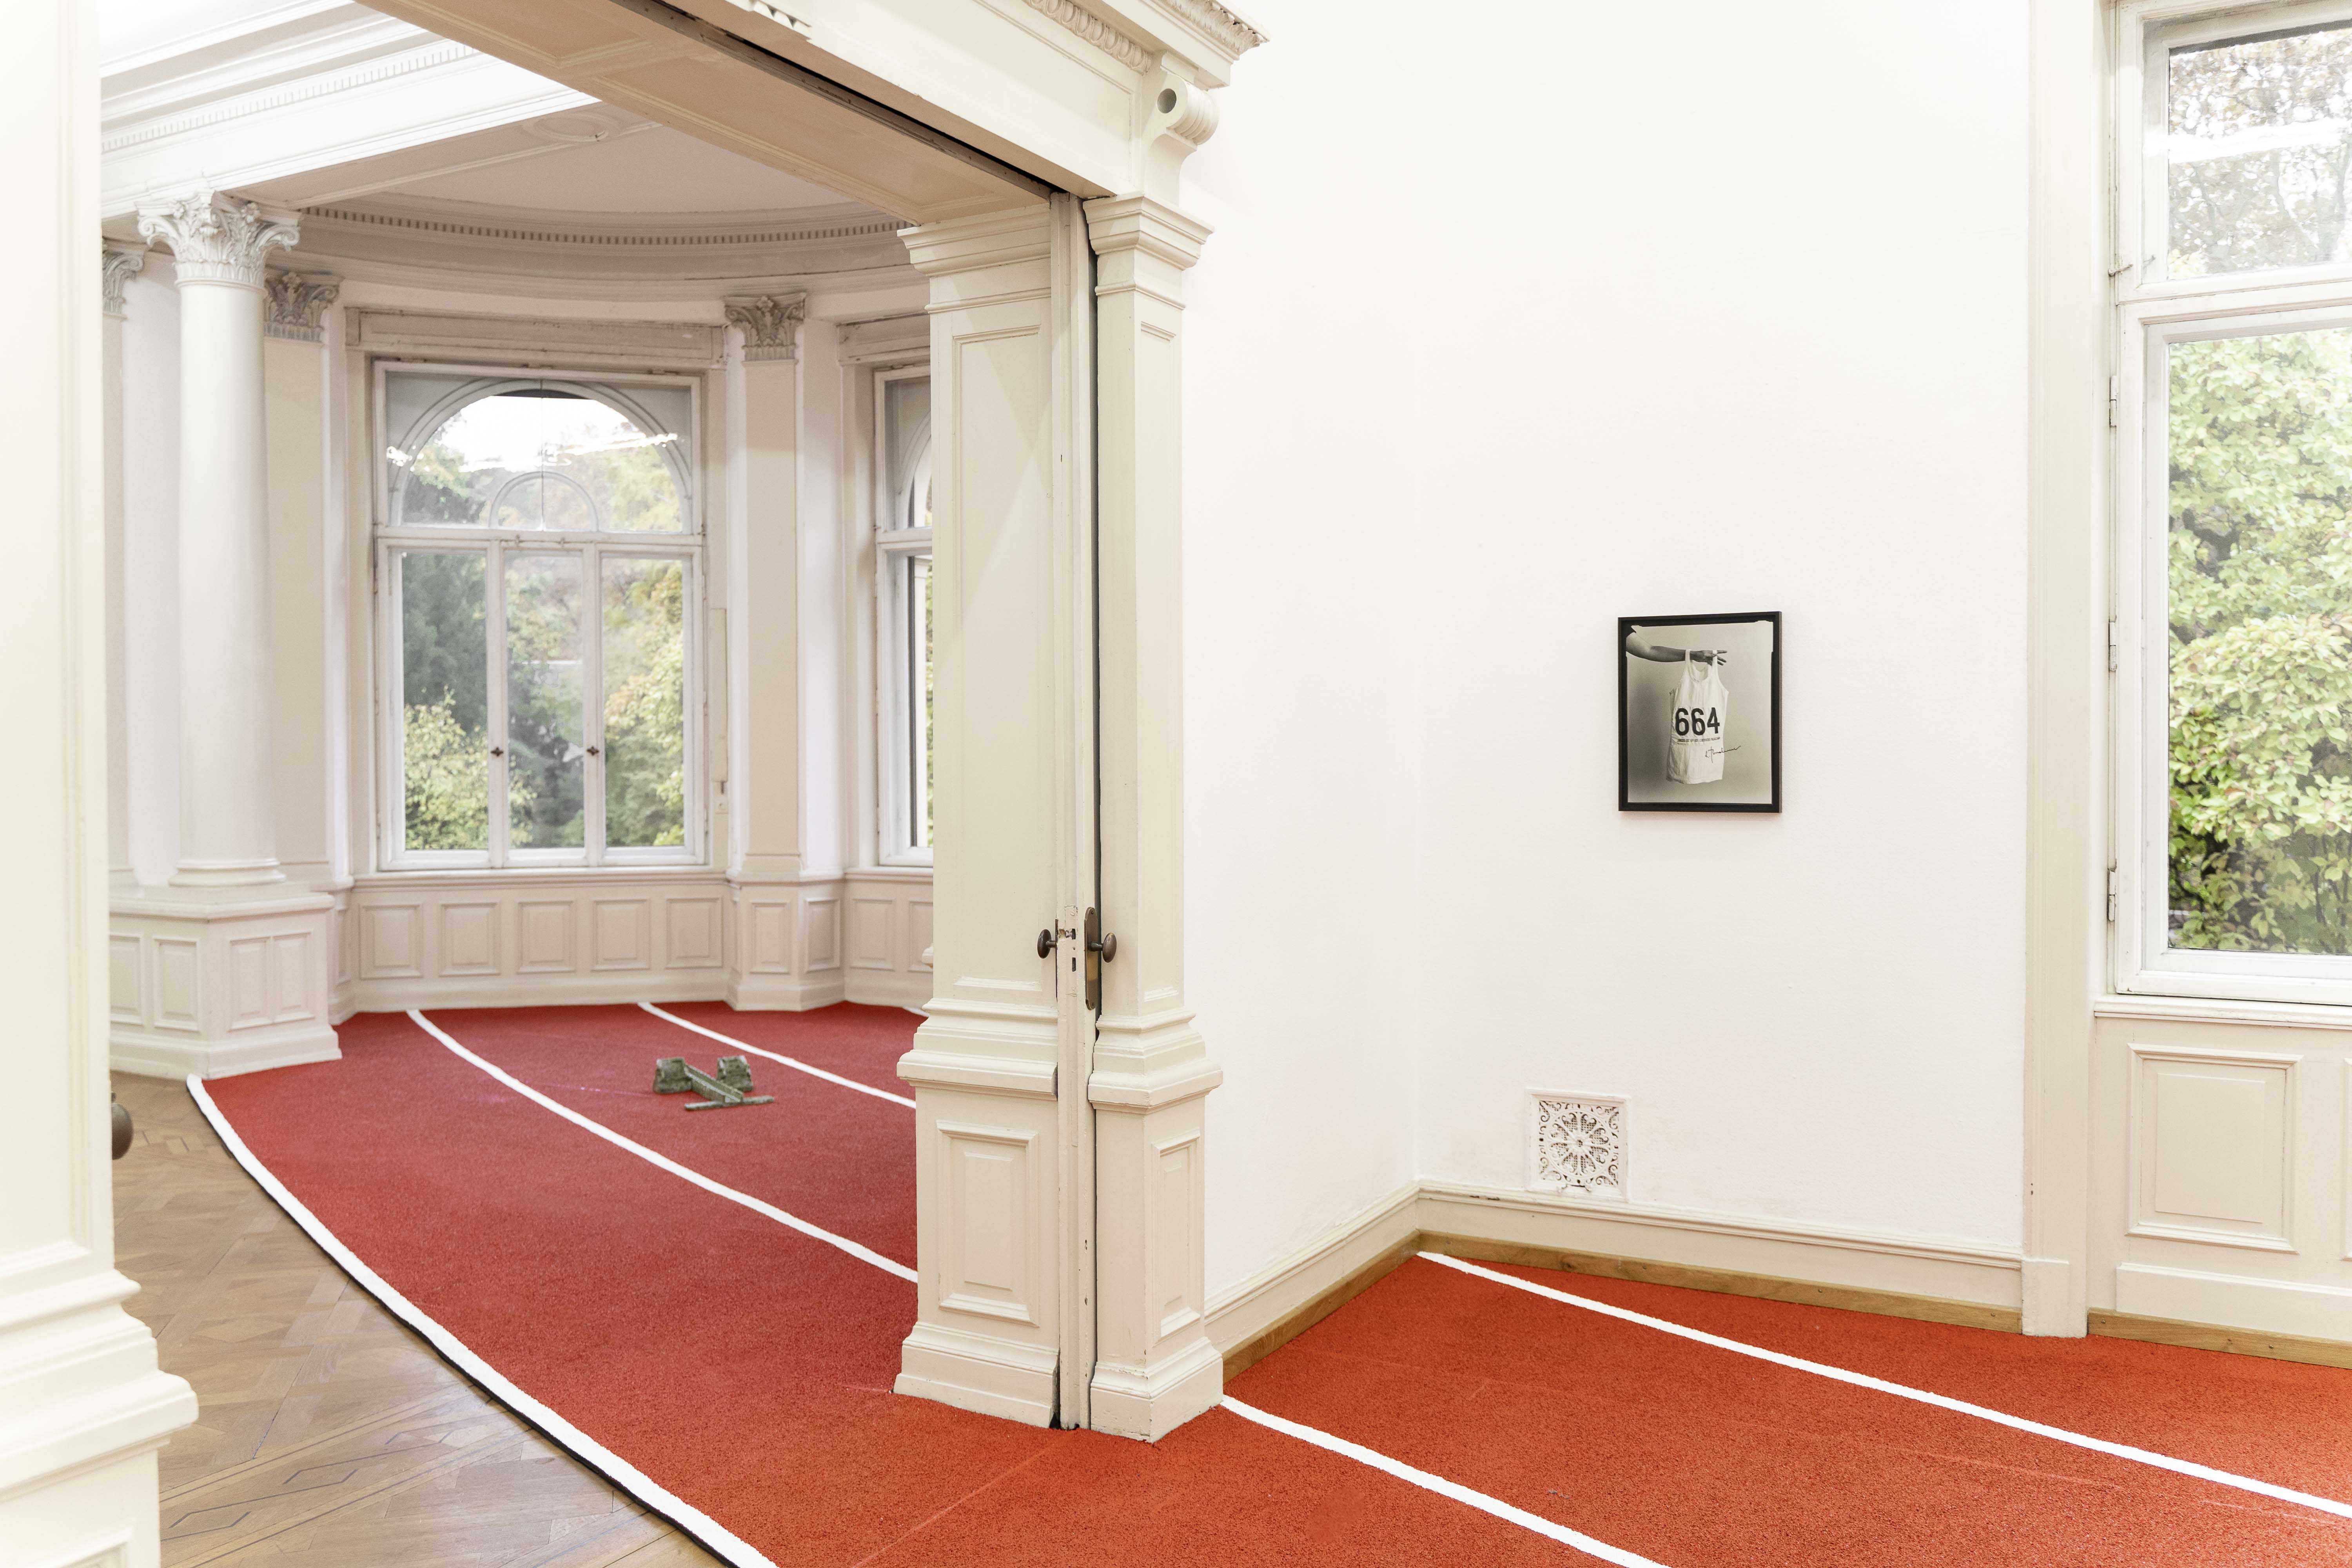 Exhibitionview, Laufbahn and Trikot, Villa Merkel